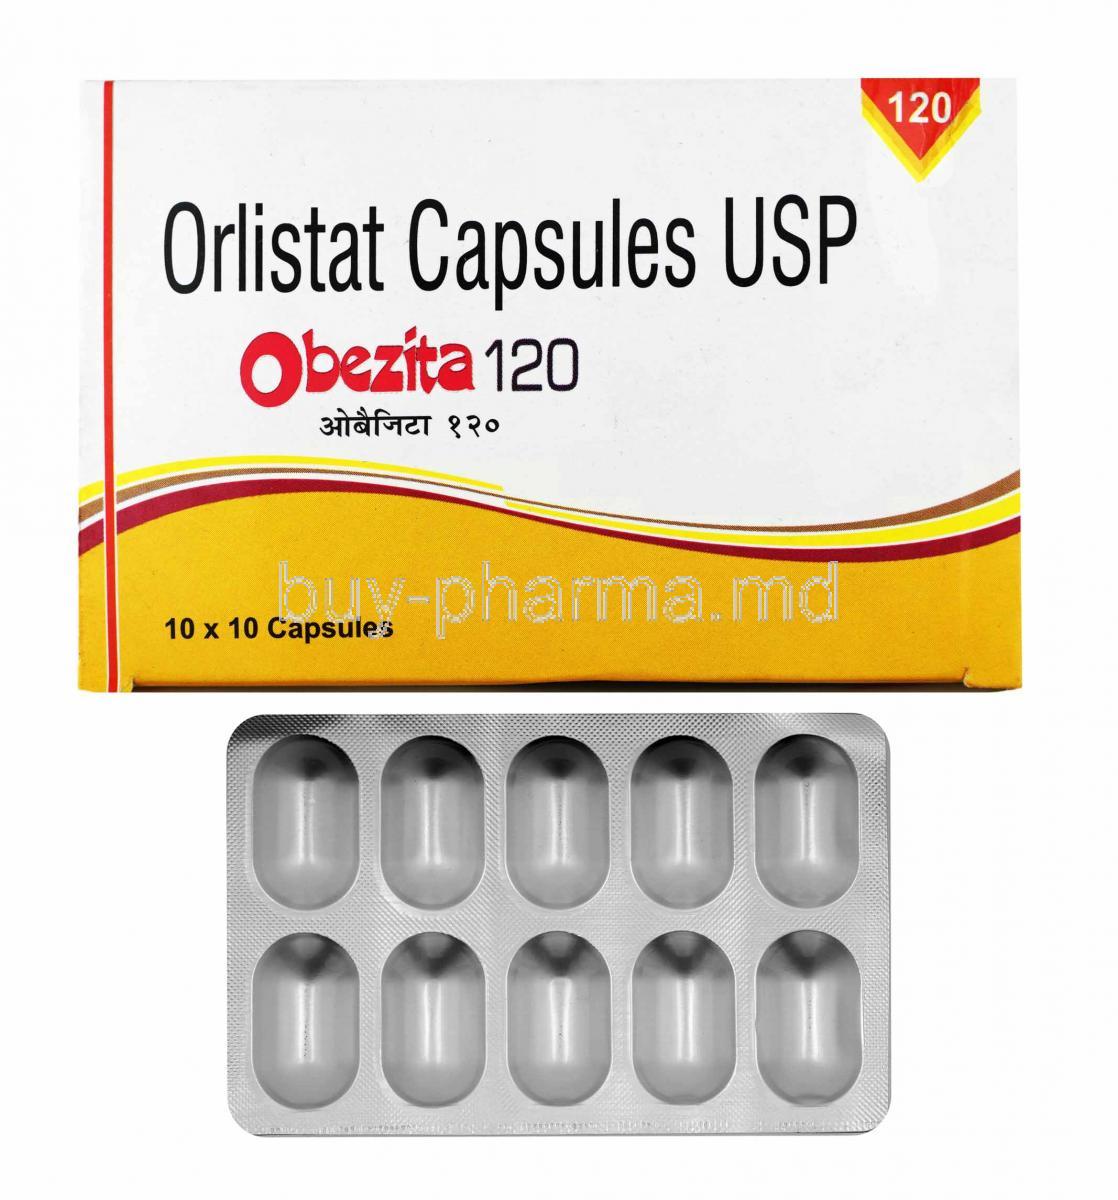 Obezita, Orlistat 120mg box and capsules